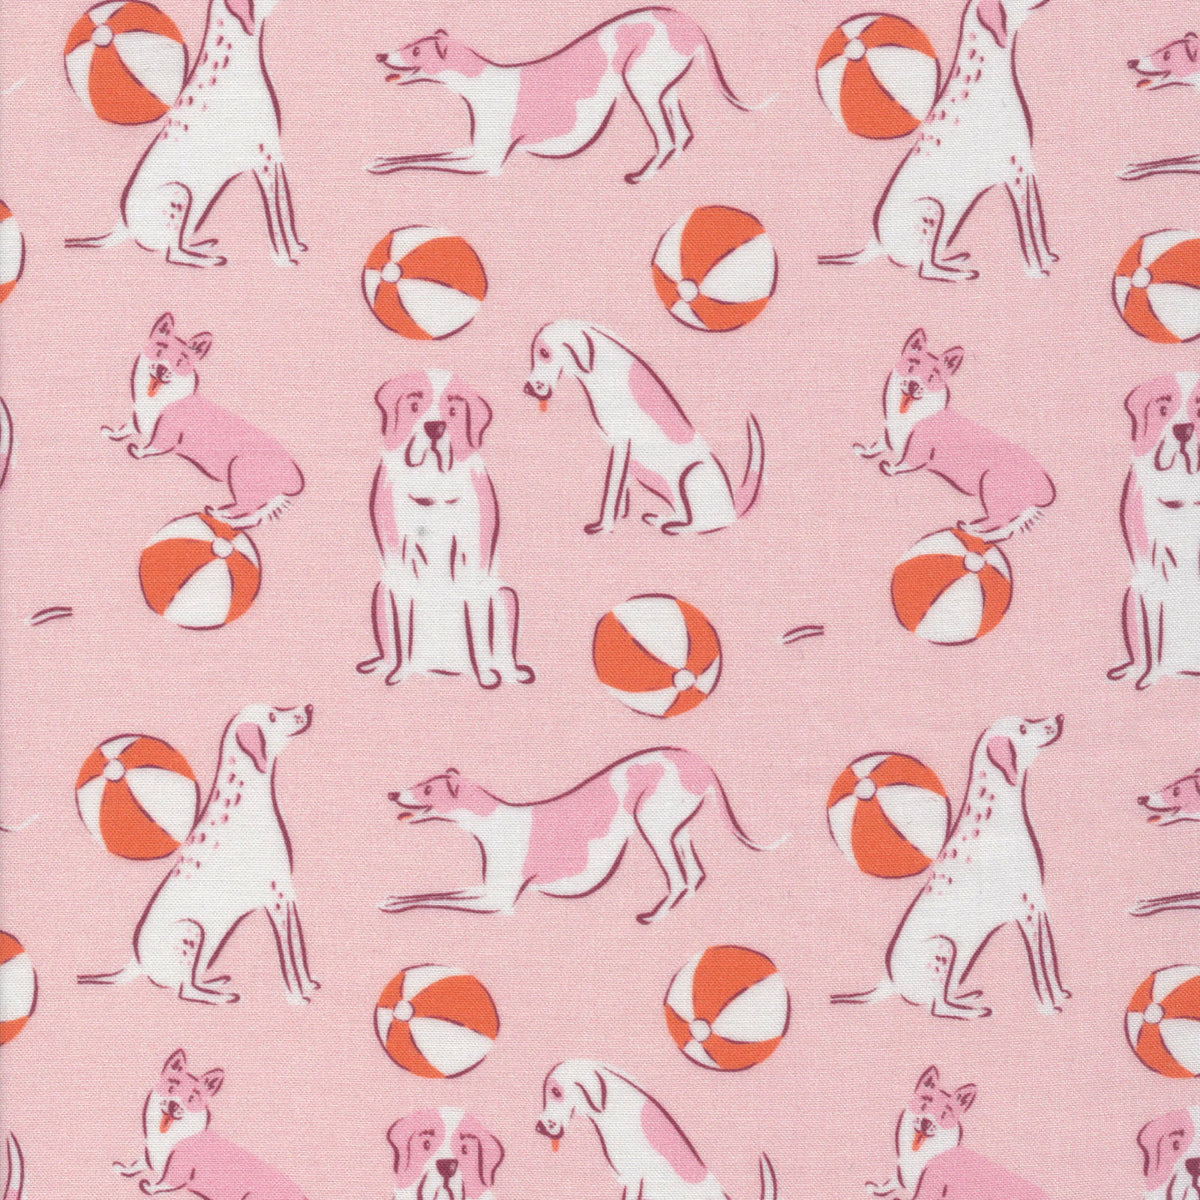 Dog Days of Summer Quilt Fabrics - Beach Ball Bounce in Pink - 277411